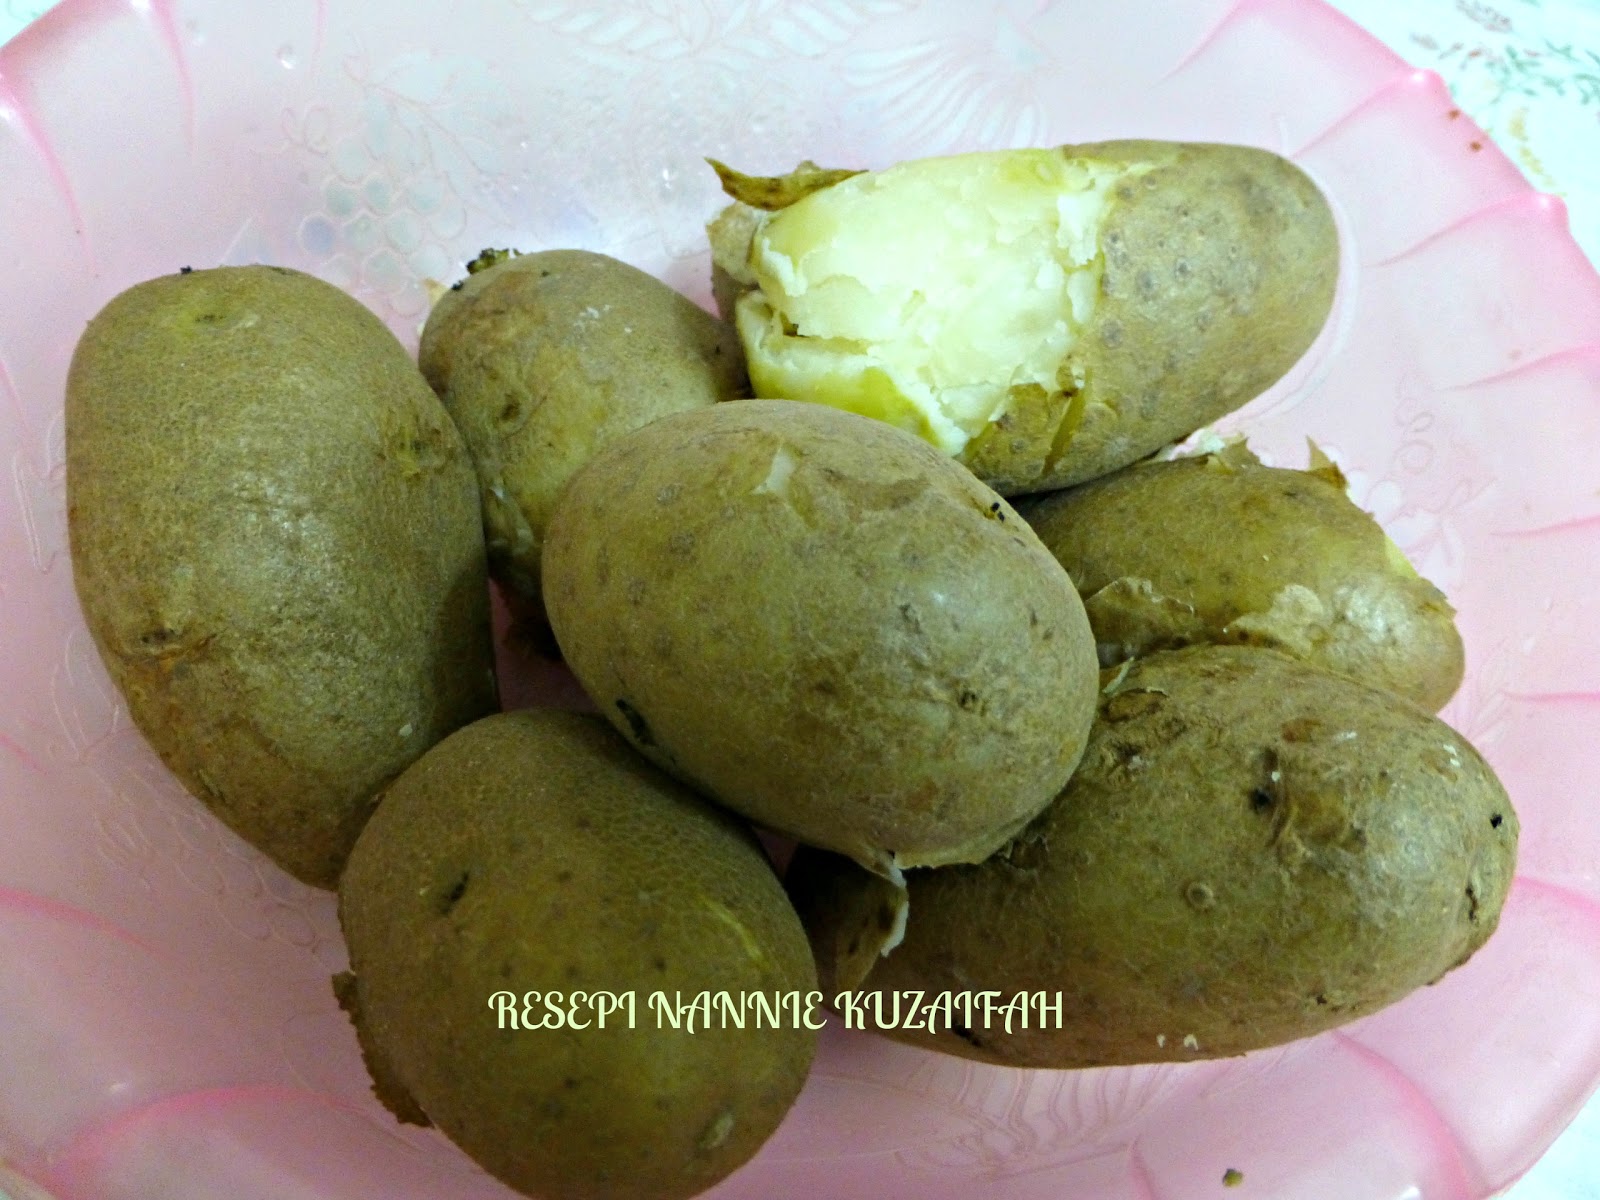 RESEPI NENNIE KHUZAIFAH: Mash potatoes lemak berkrim